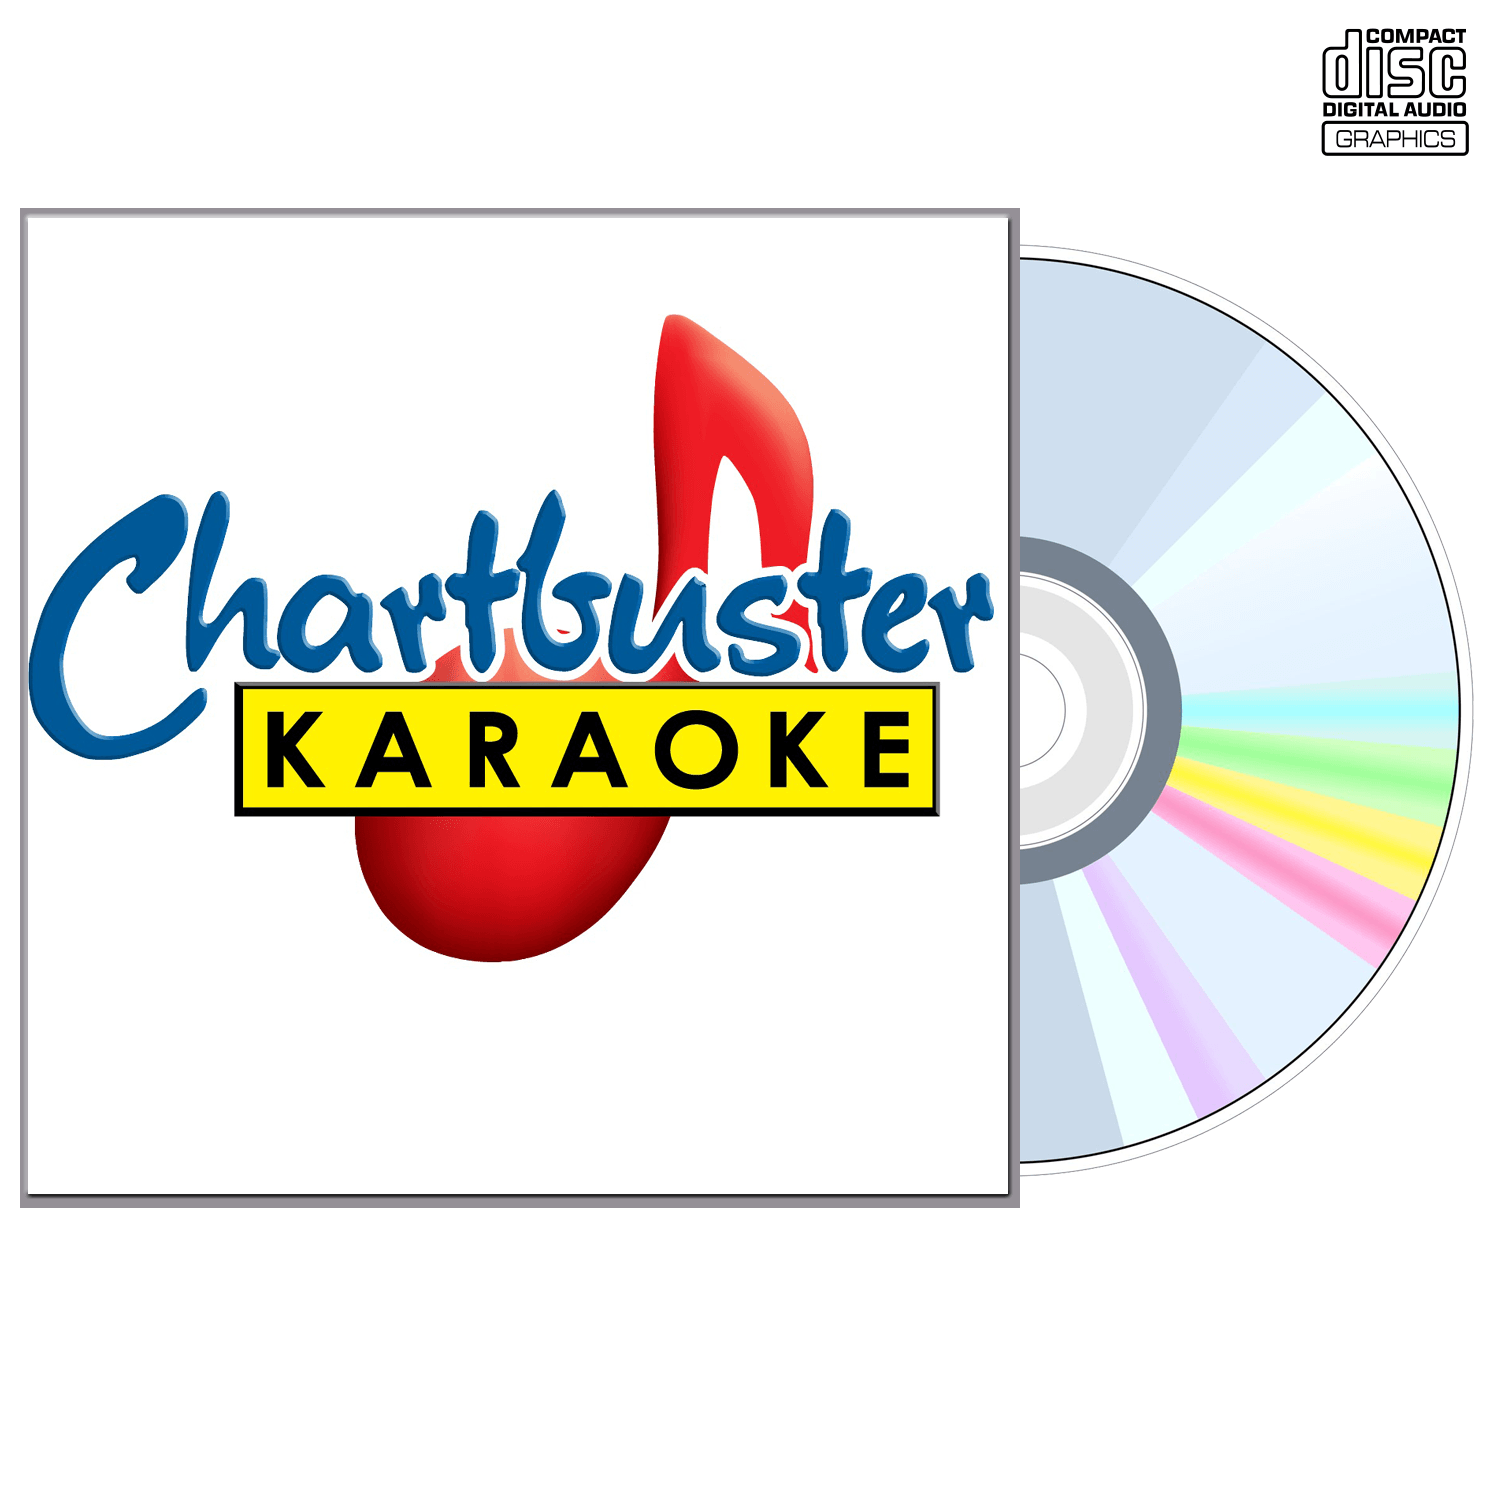 Andy Williams - CD+G - Chartbuster Karaoke - Karaoke Home Entertainment